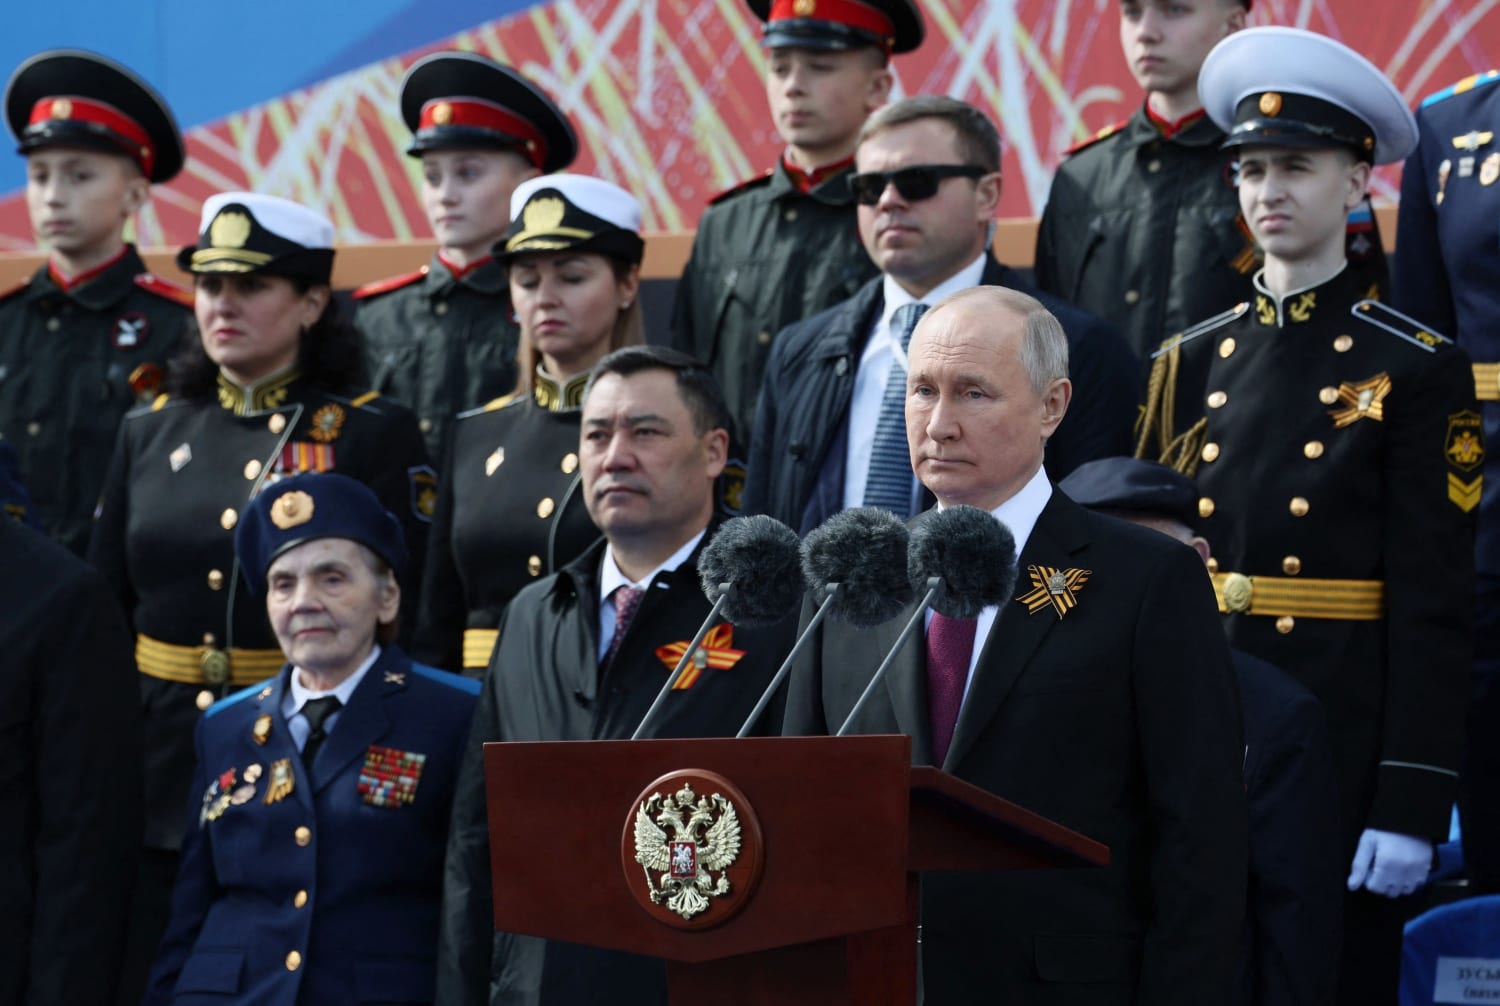 Putin leads scaled back Victory Day celebrations amid Ukraine war